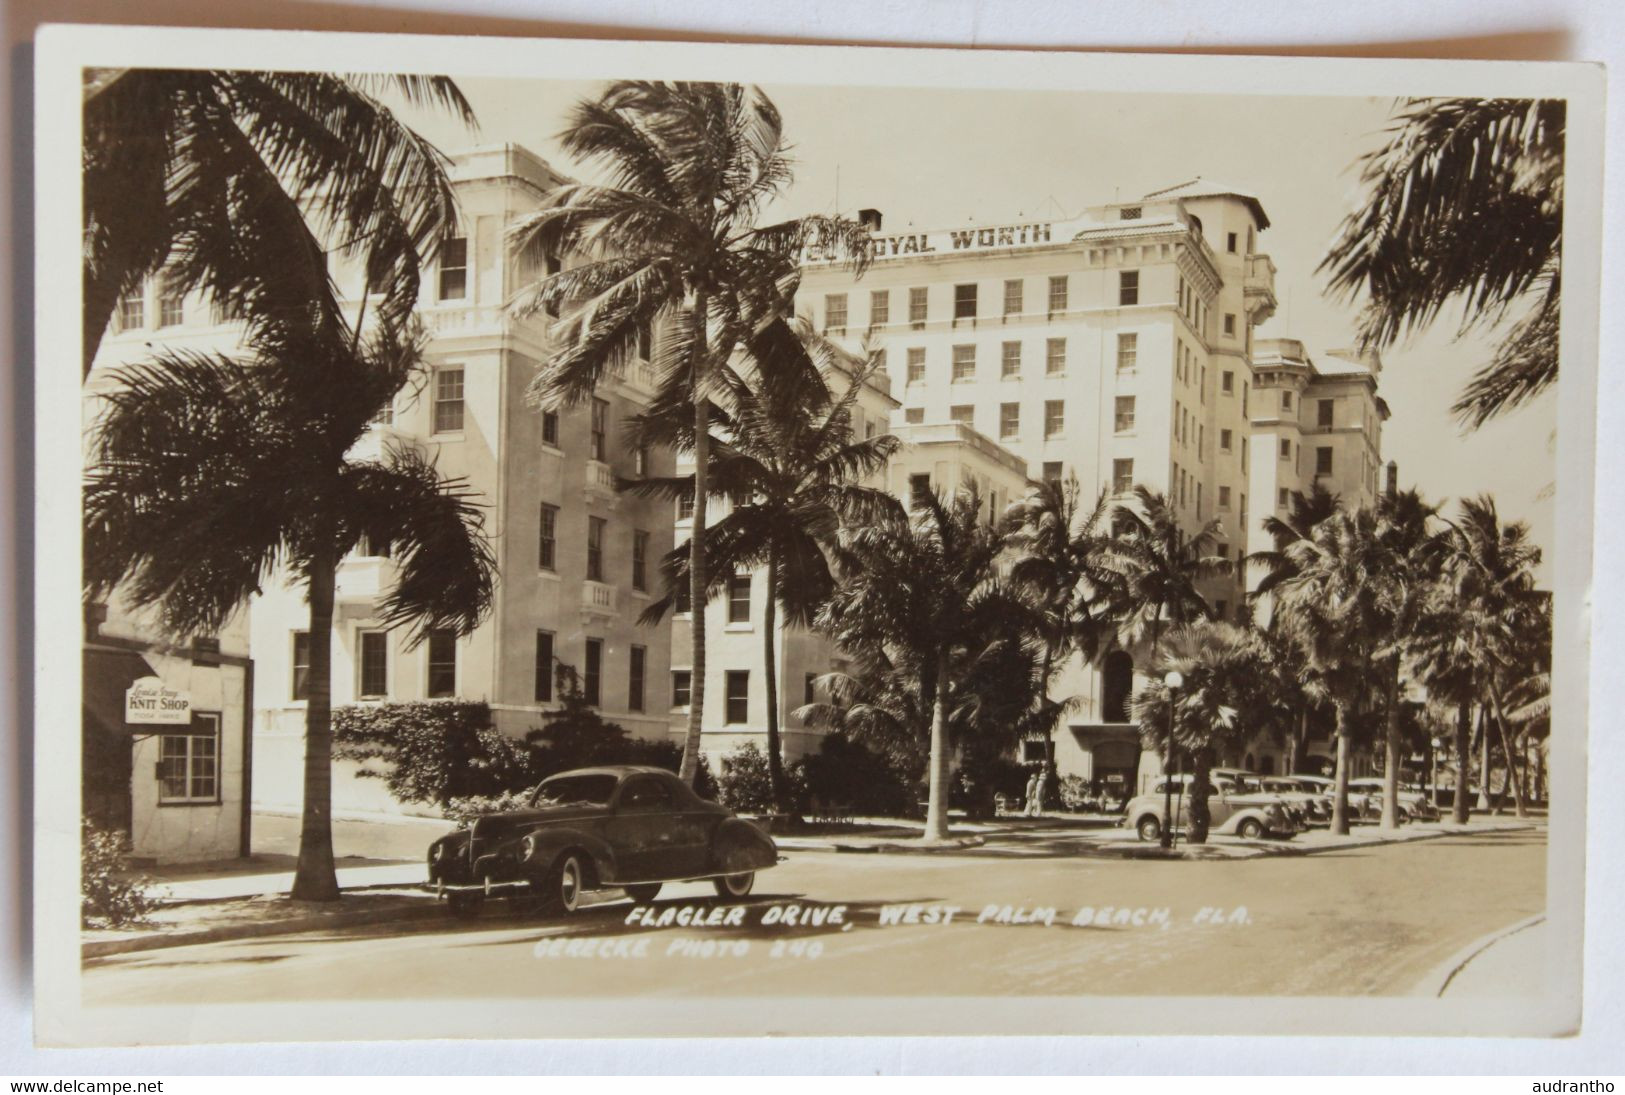 CPA Qualité Photo 1939 West Palm Beach Flagler Drive Photographe Gerecke Hotel Royal Worth Louise Gray Knit Shop - West Palm Beach